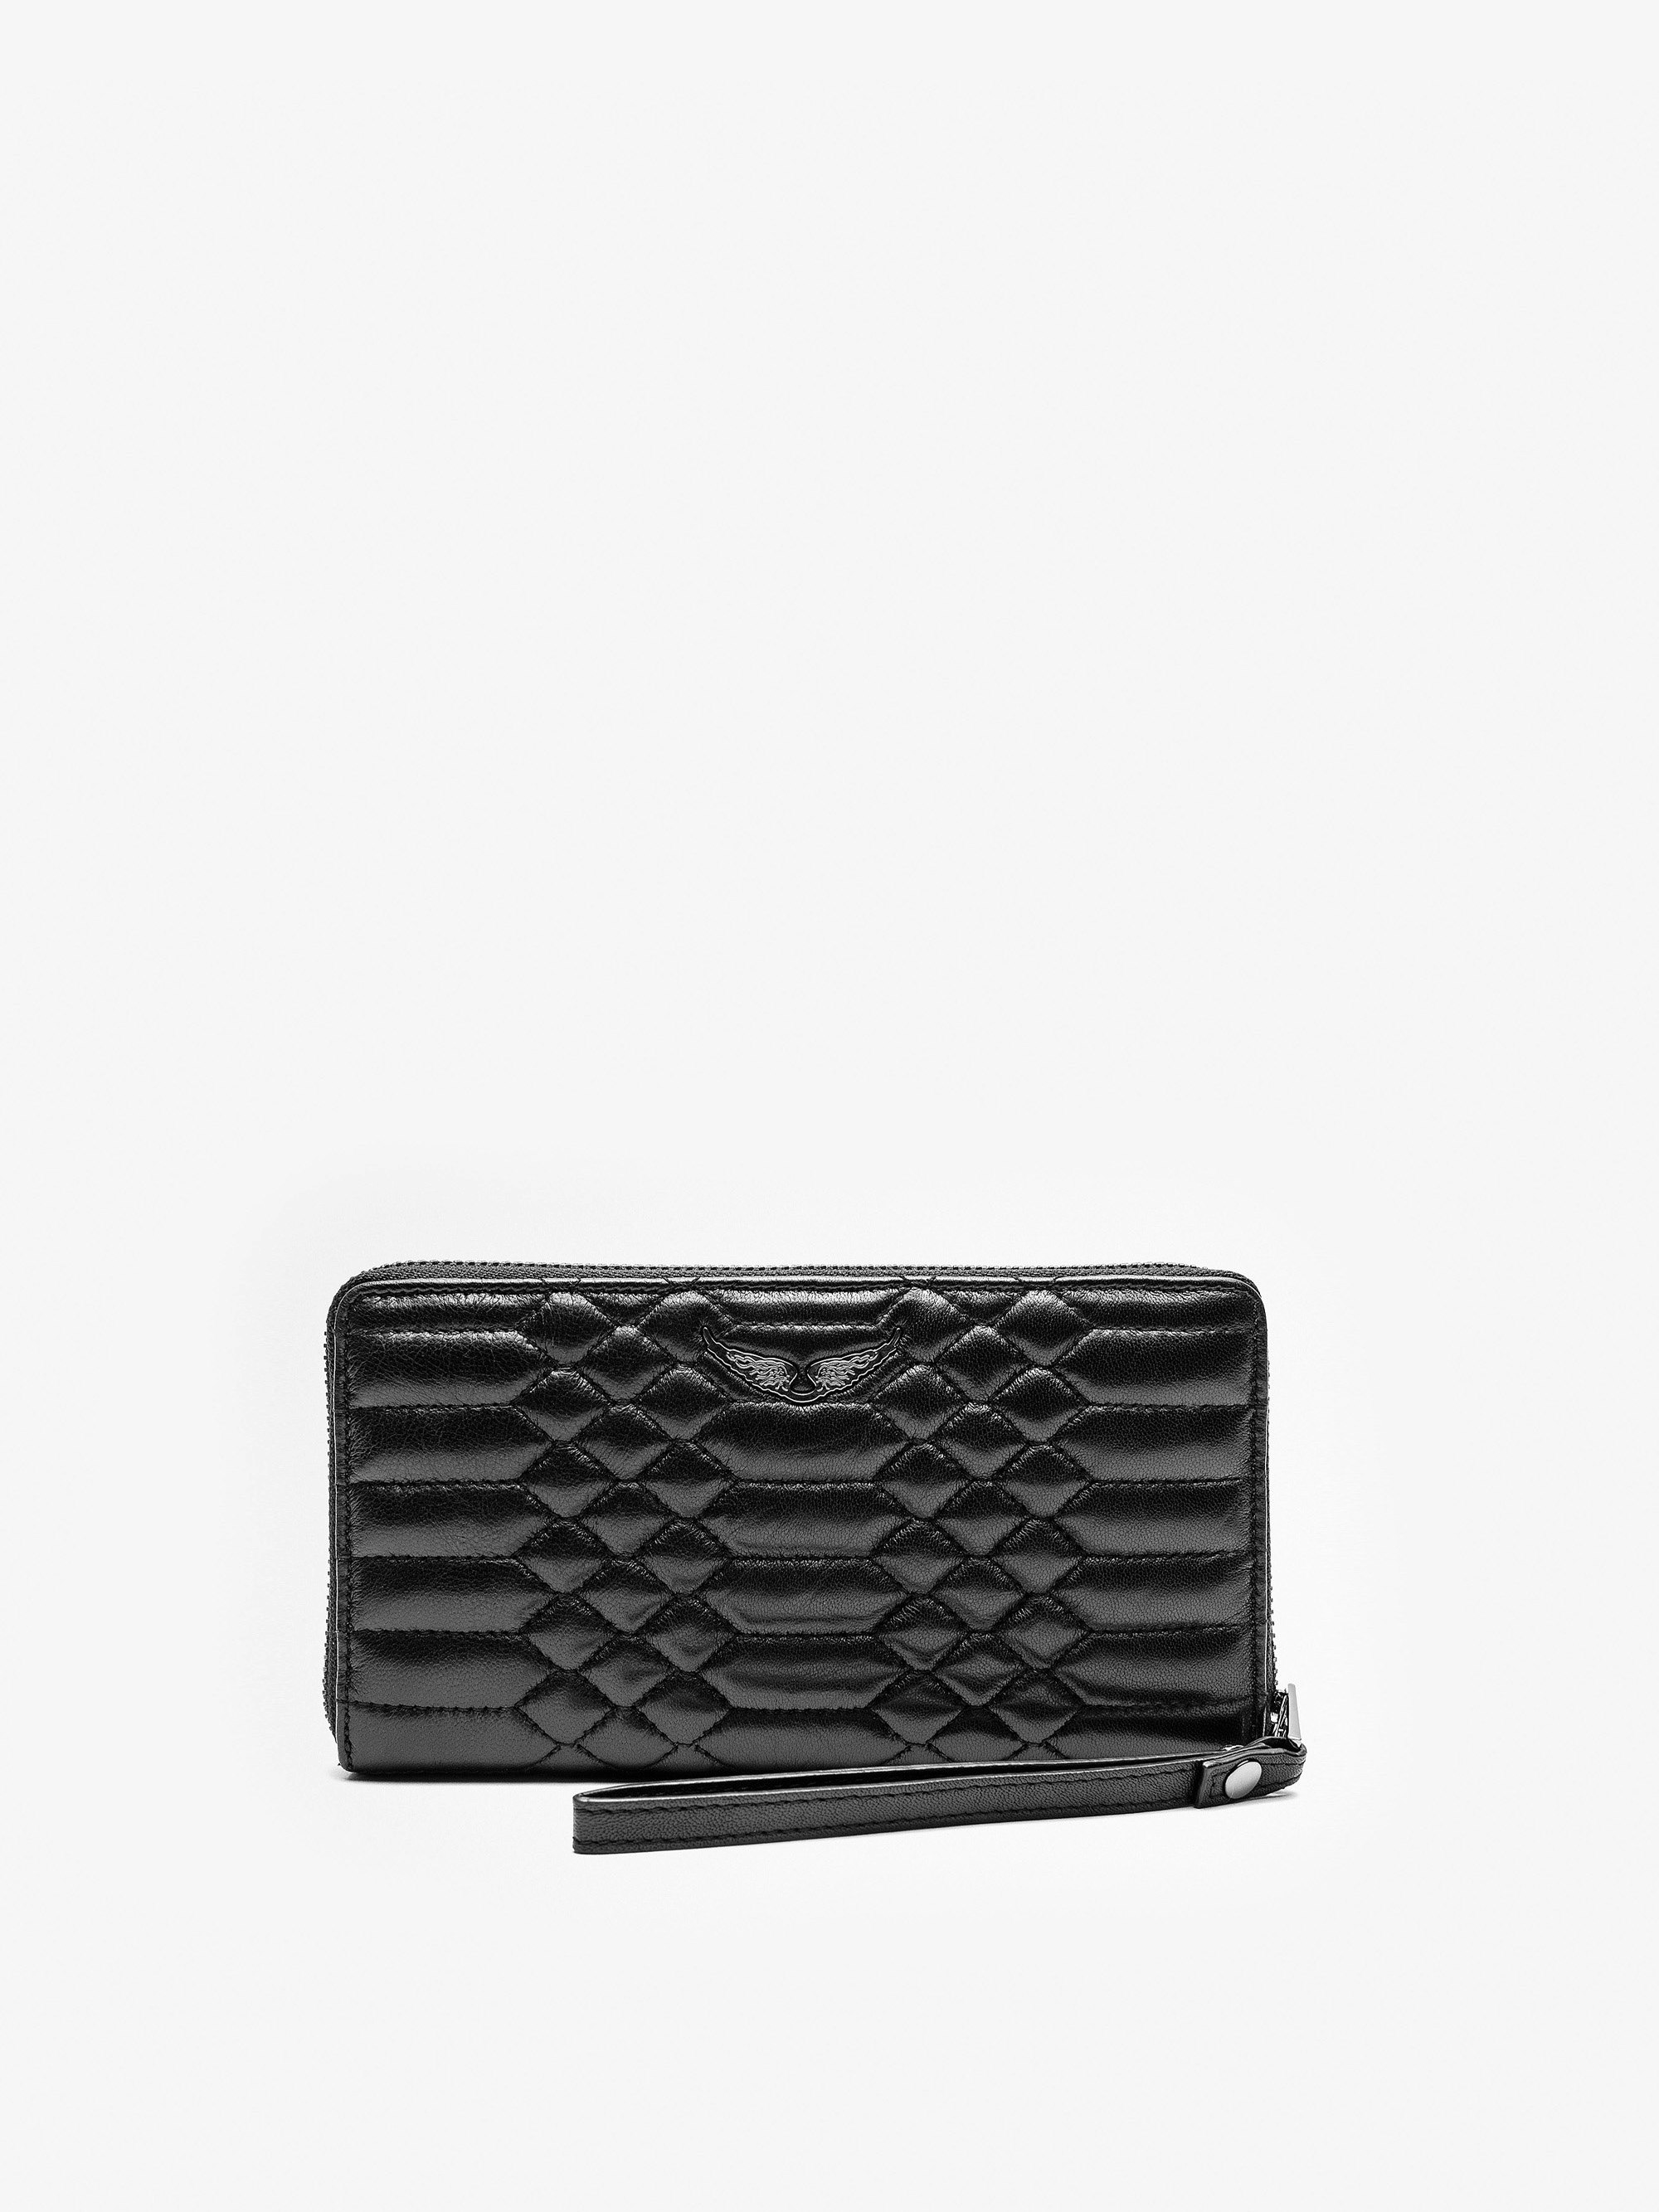 Brieftasche Compagnon Matelasse - Damen-Portemonnaie aus schwarzem, gestepptem Leder.